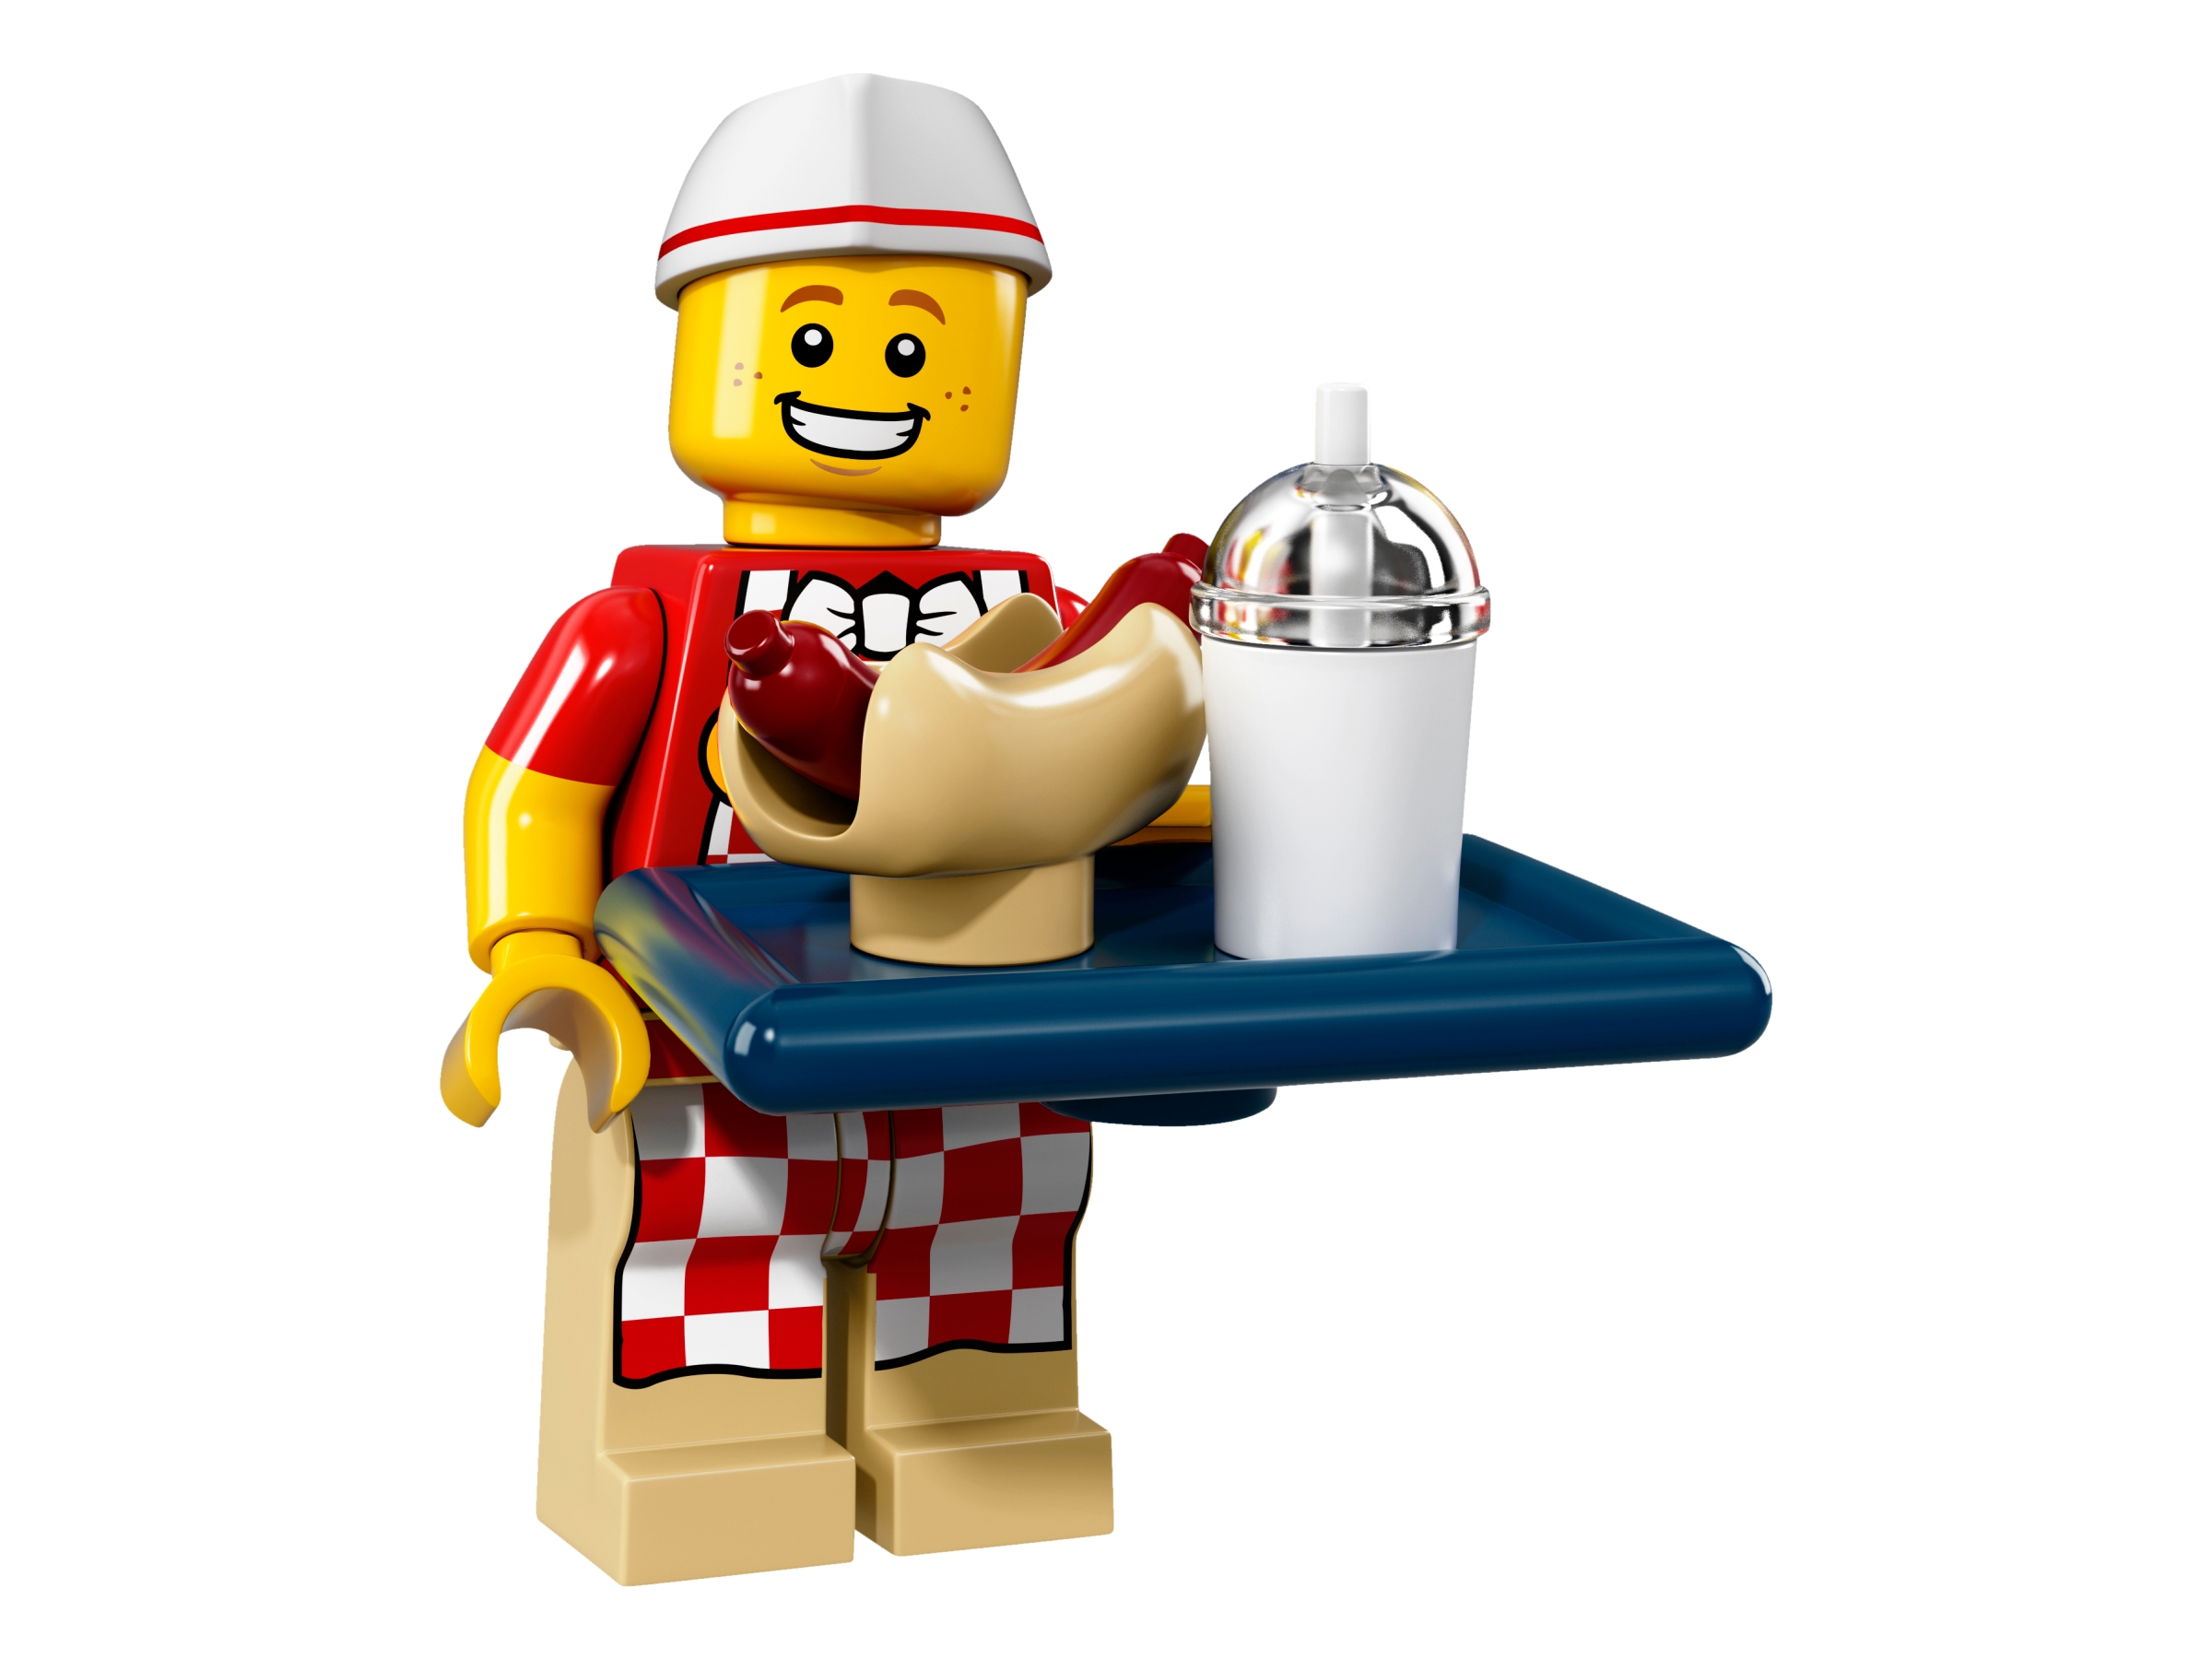 LEGO 71018 MINIFIGURES Series 17 COMPLETE SET of 16 figures with unused code